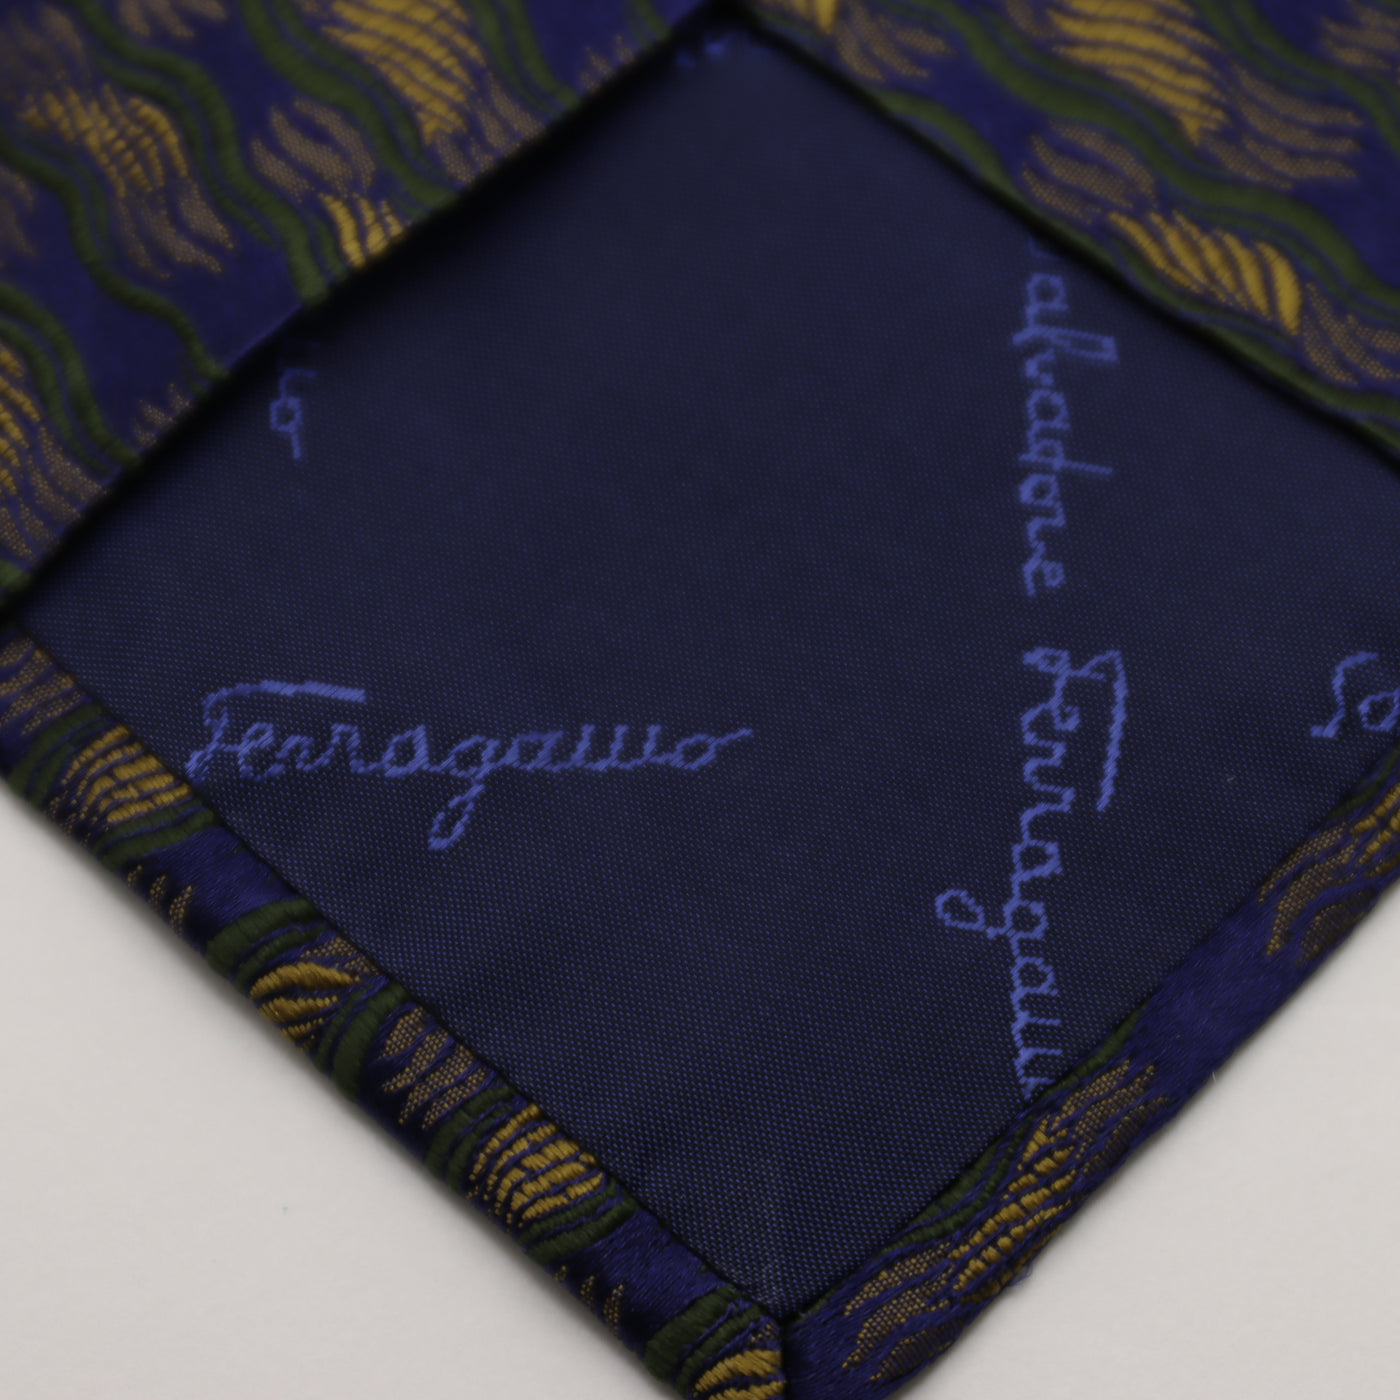 Salvatore Ferragamo Cravatta Uomo Vintage Blu e Verde 100% Seta